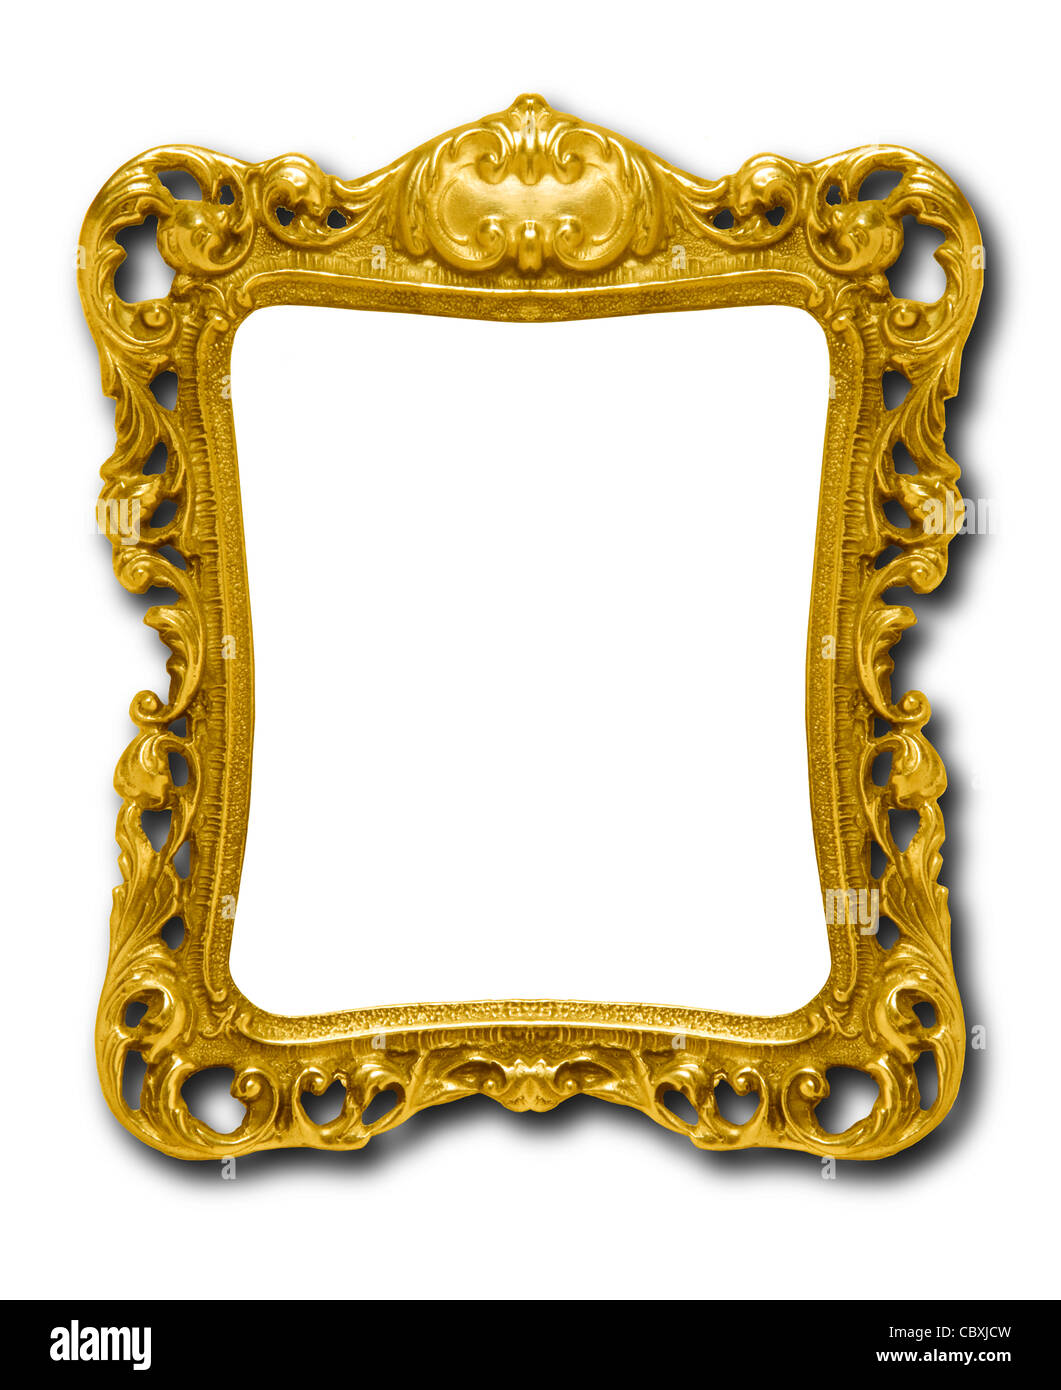 Oro ornamentado picture frame siluetas contra un fondo blanco con sombra Foto de stock